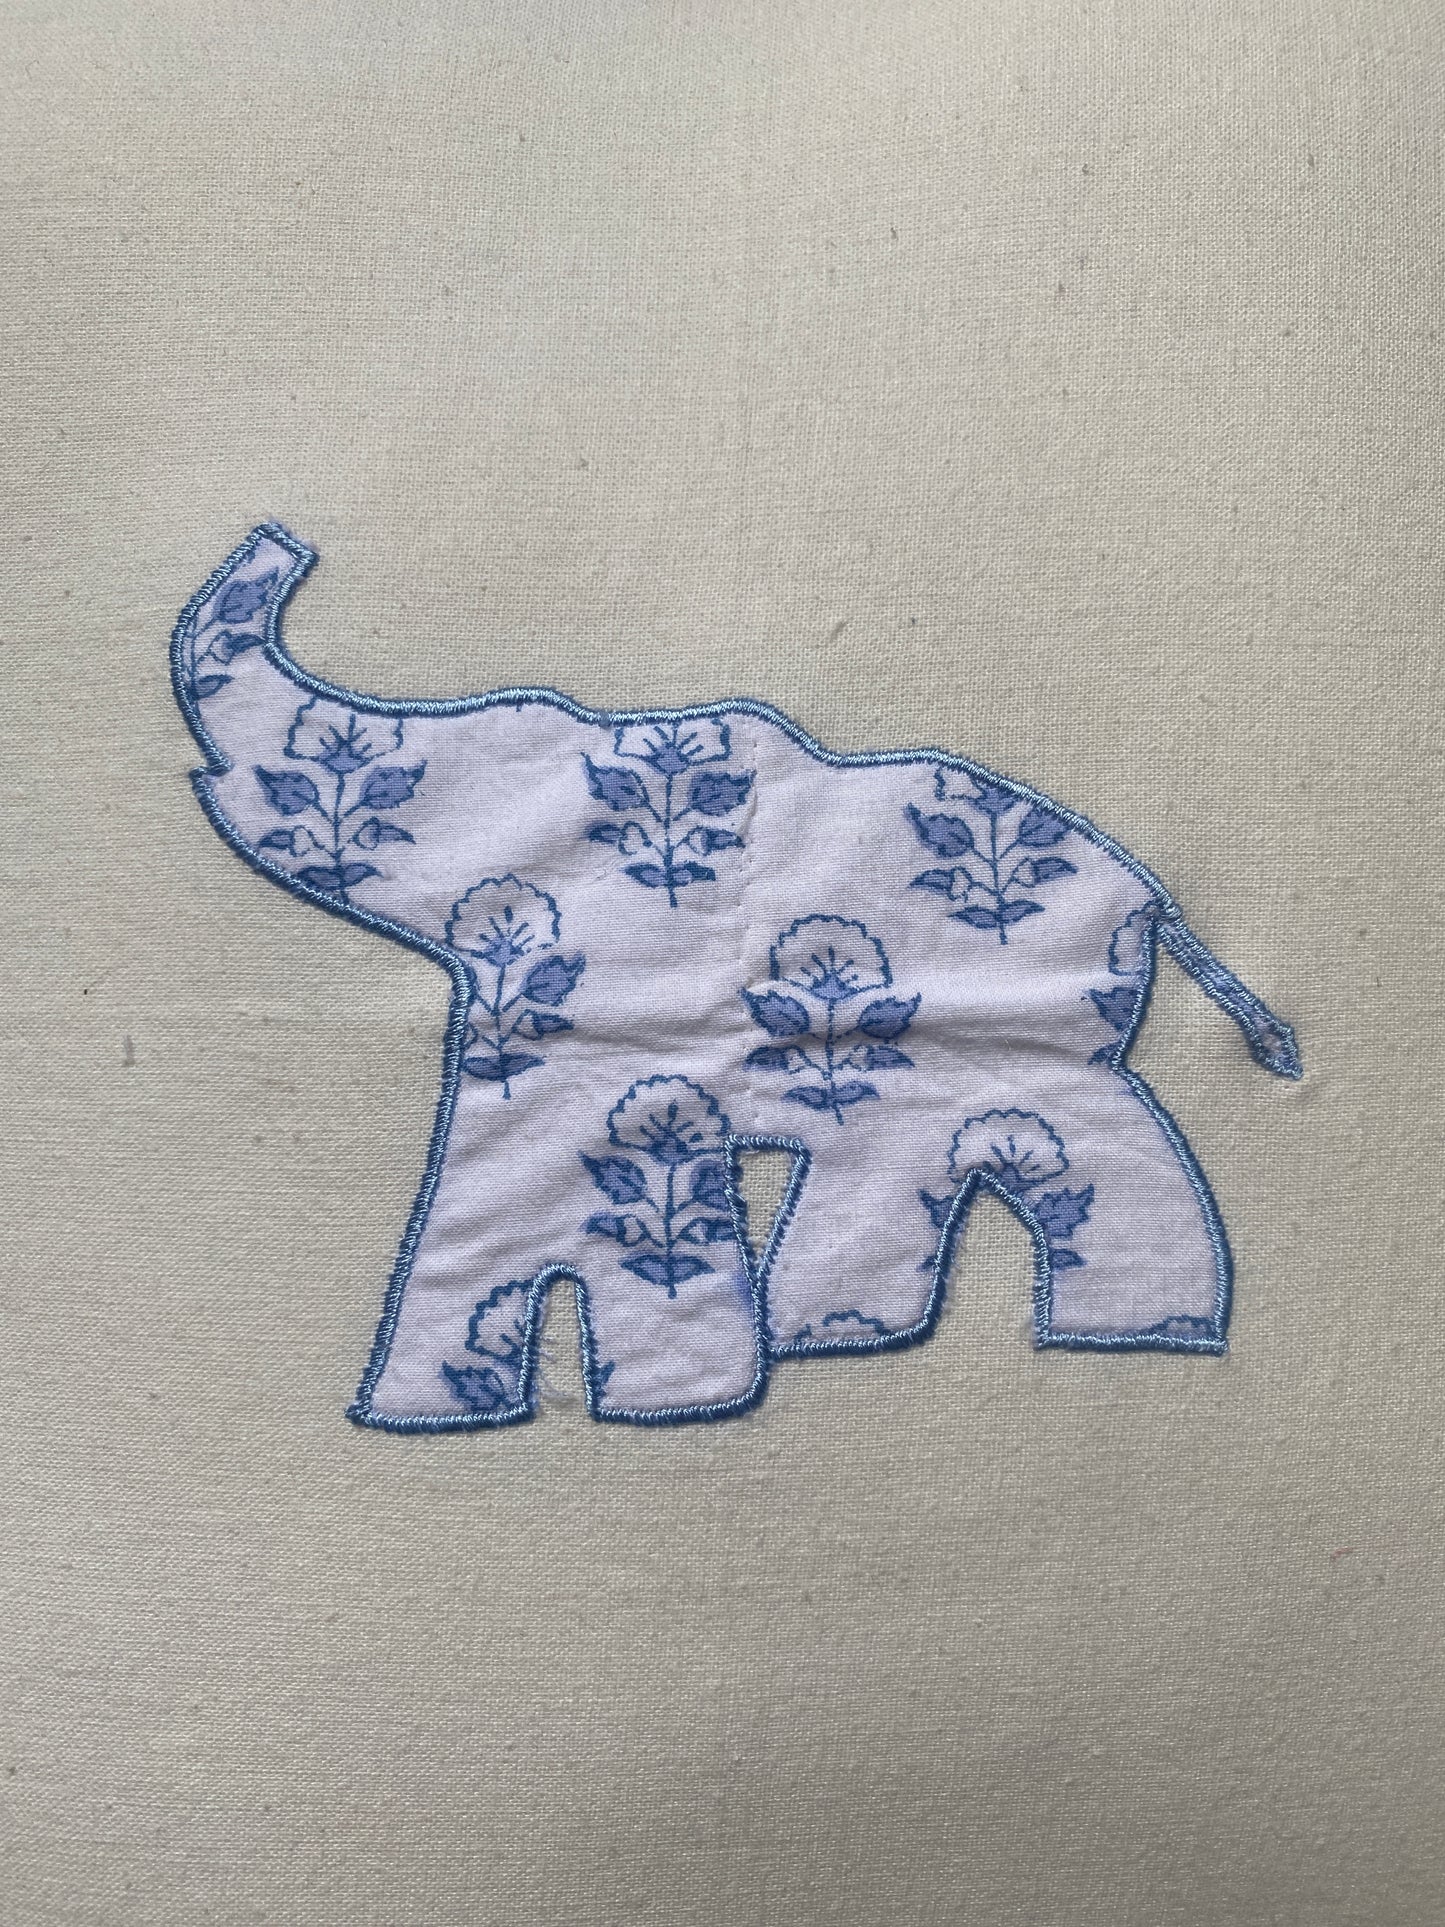 Blue Elephant Cushion